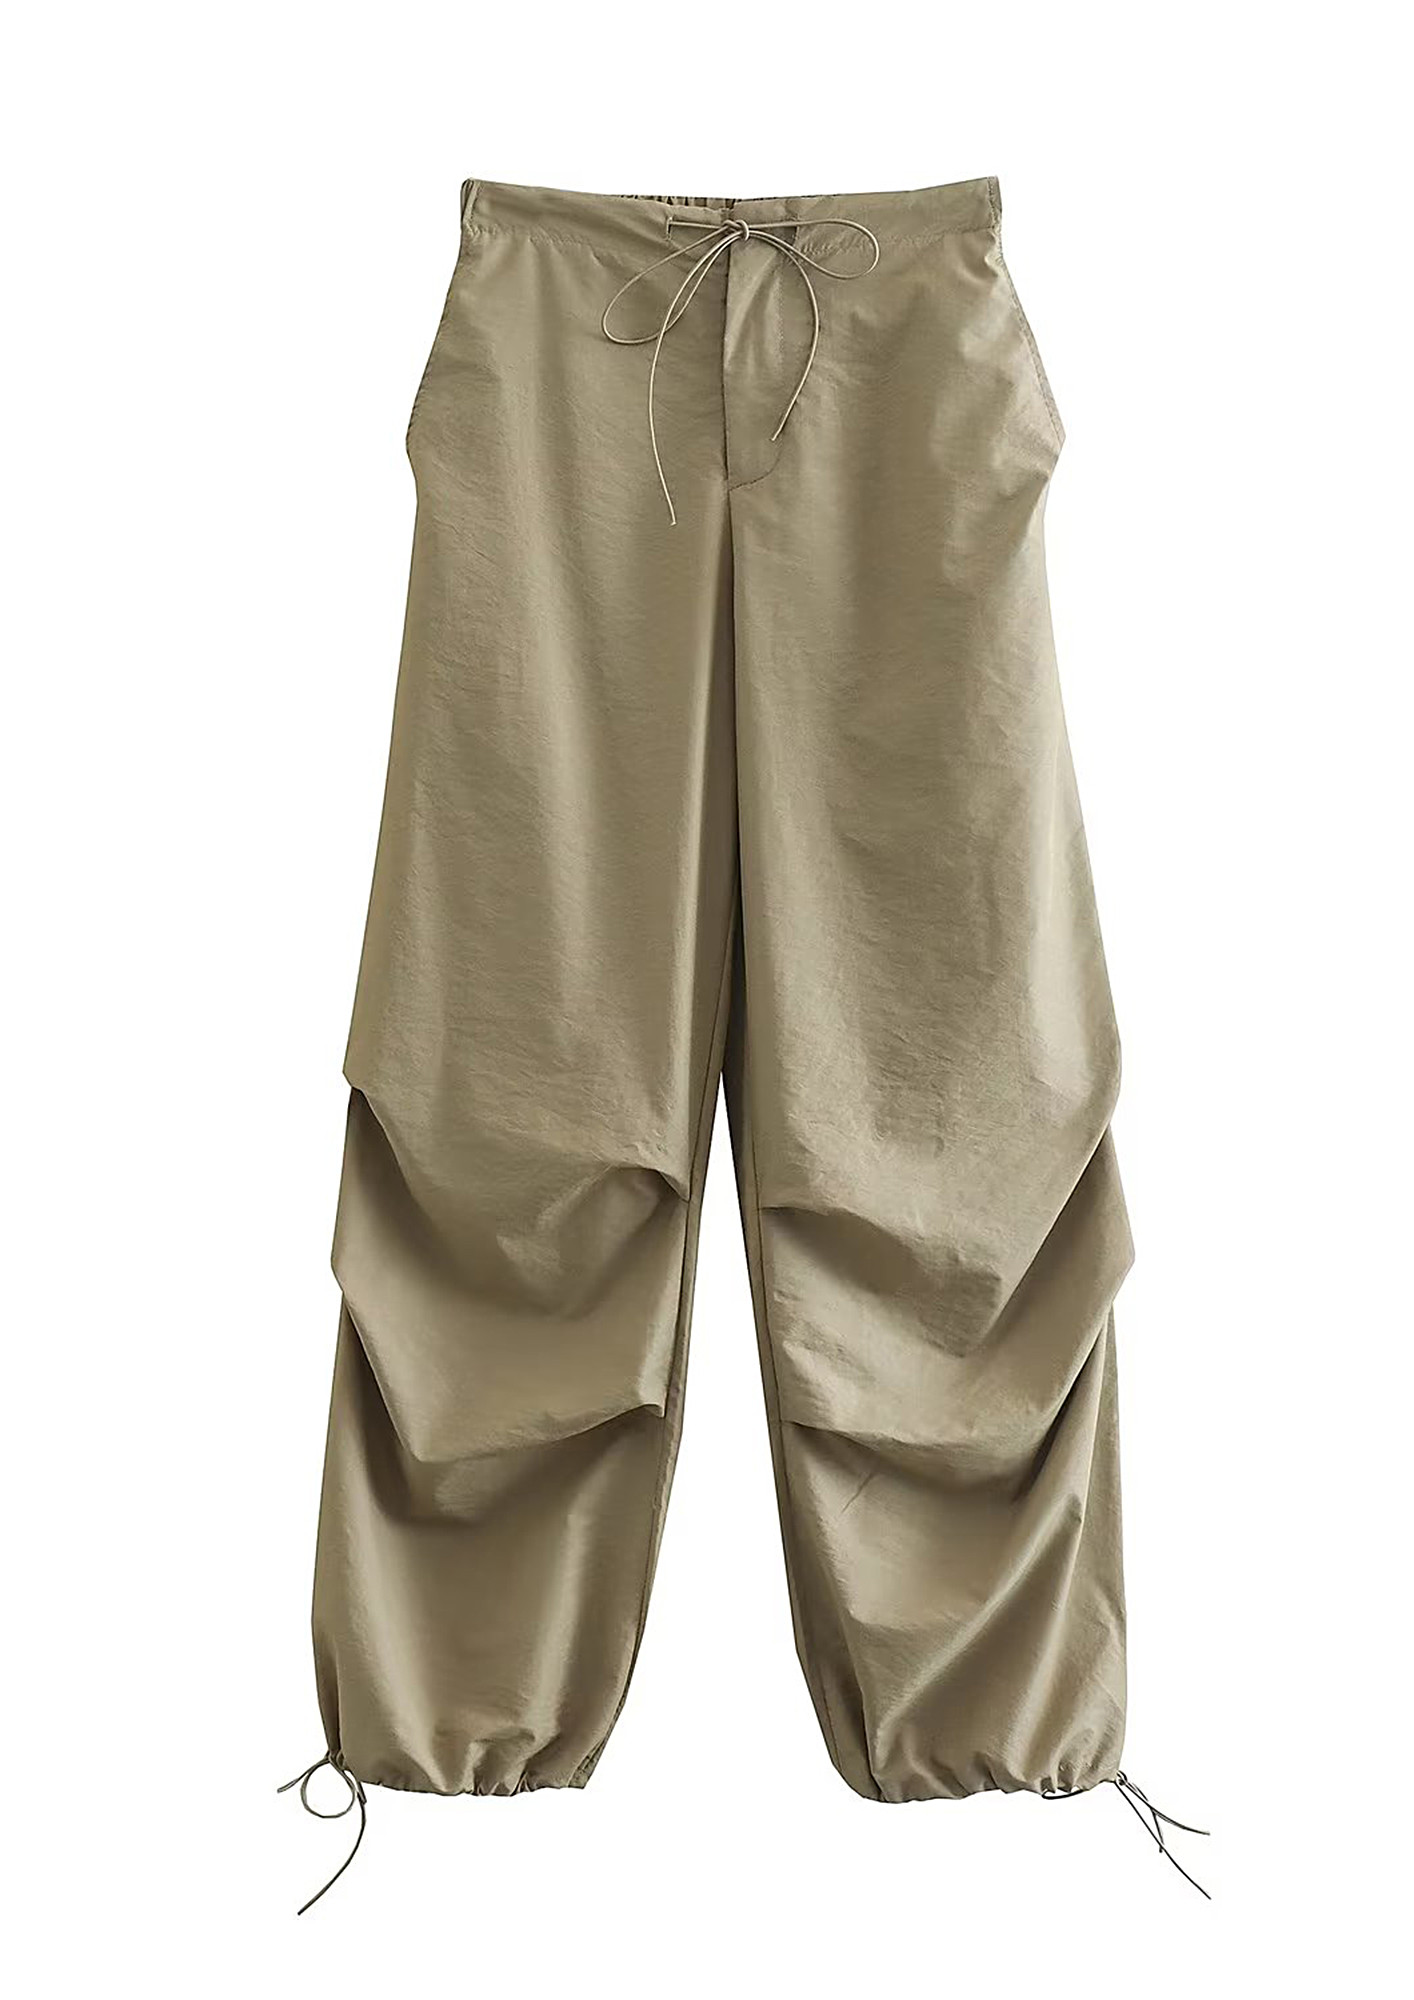 IZF Trousers and Pants  Buy IZF Khaki Parachute Pants Online  Nykaa  Fashion